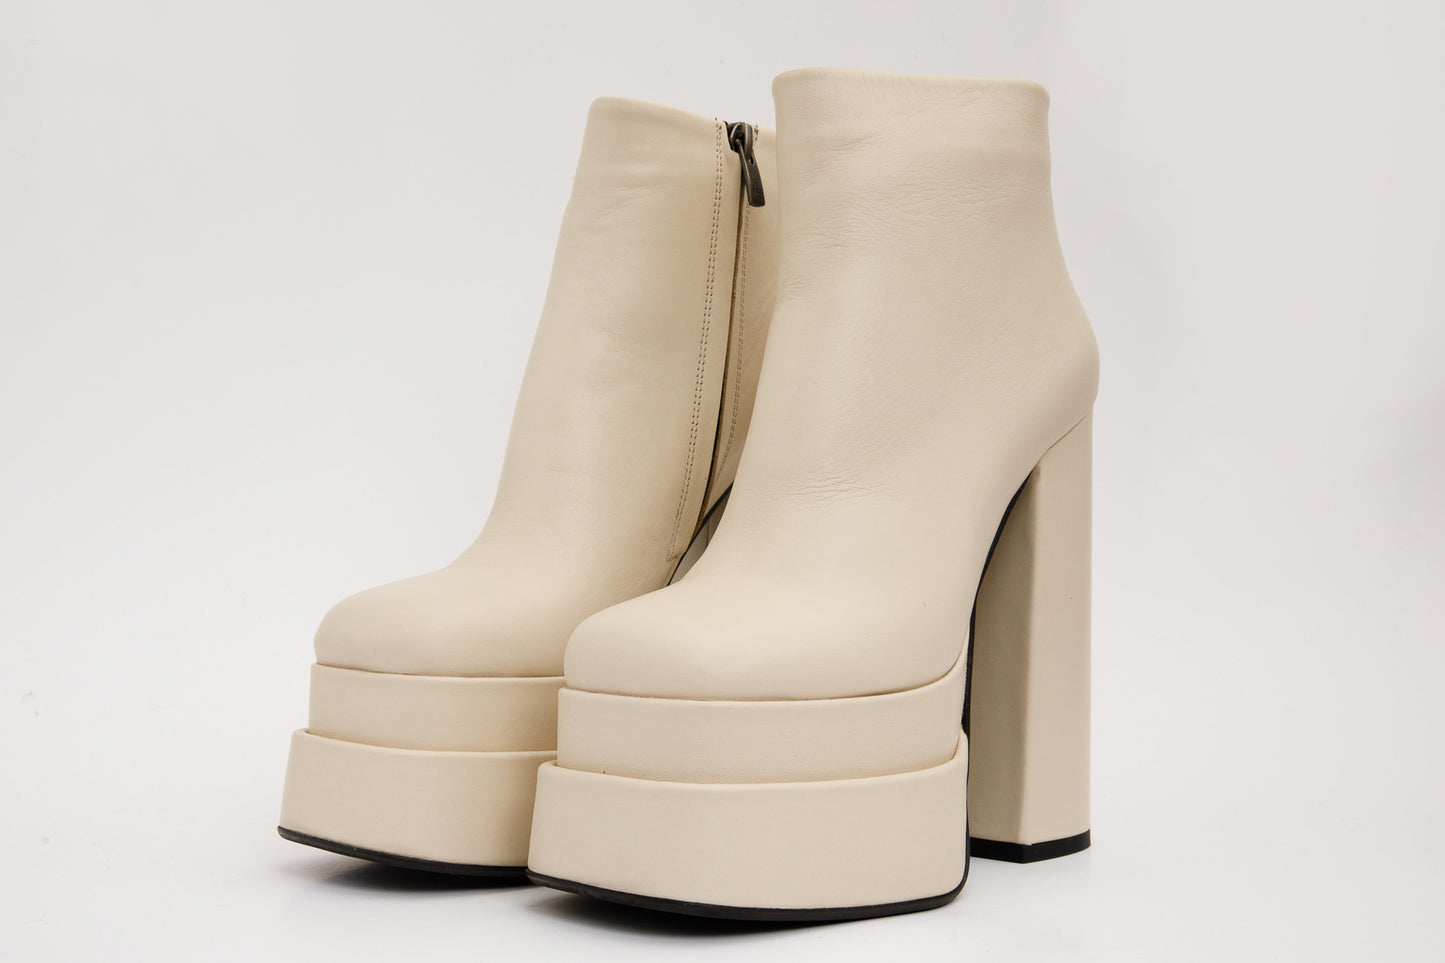 The Latino Cream Leather High Heel Women Boot